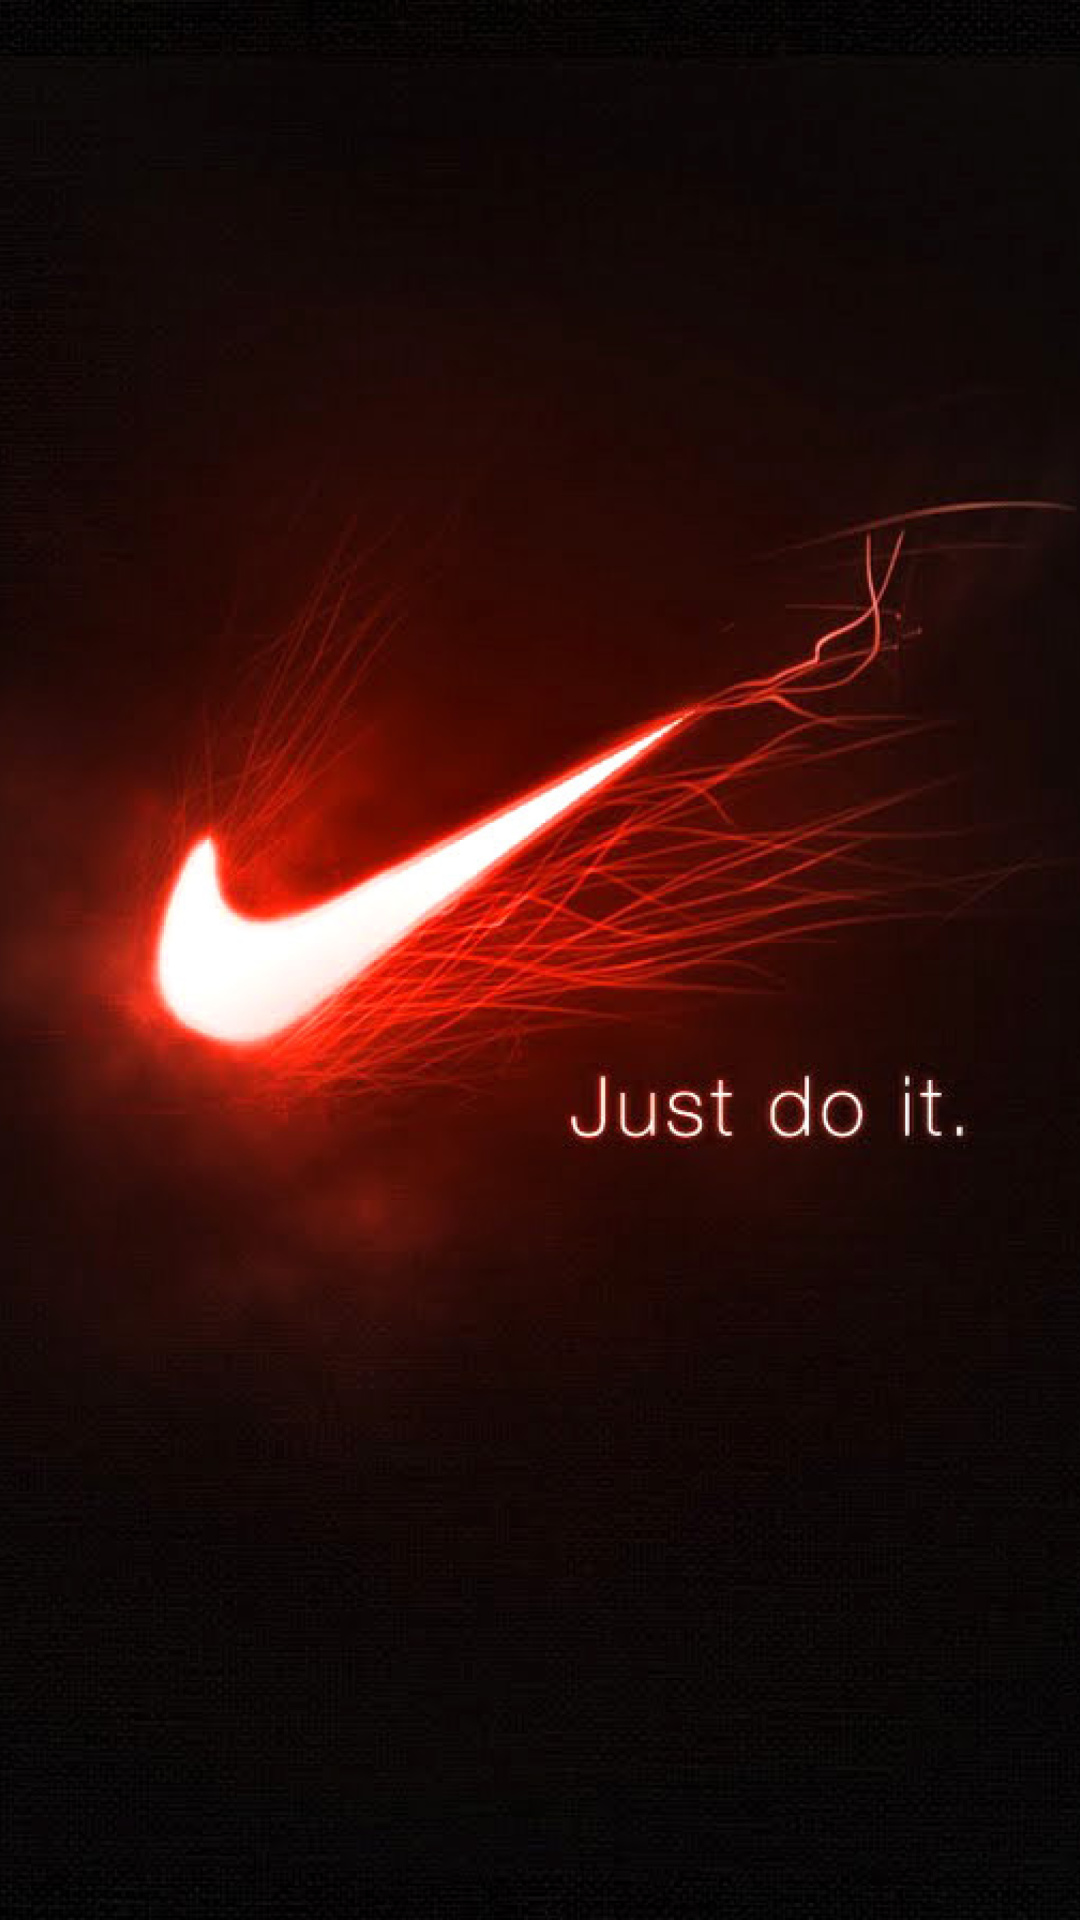 Nike Advertising Slogan Just Do It wallpaper 1080x1920